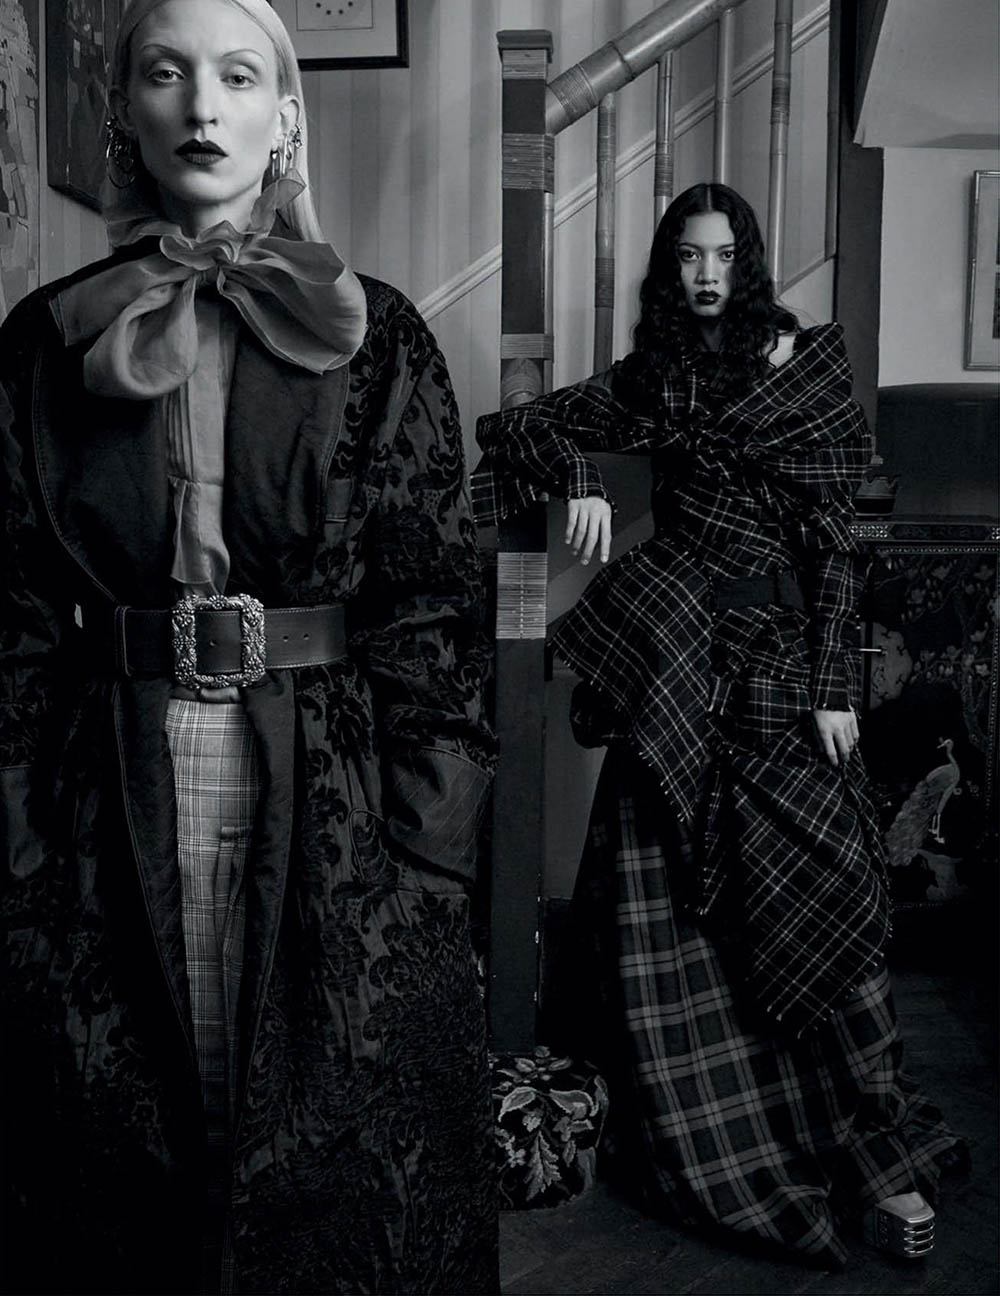 Maggie Maurer and Noah Carlos by Emma Summerton for Vogue Spain September 2019